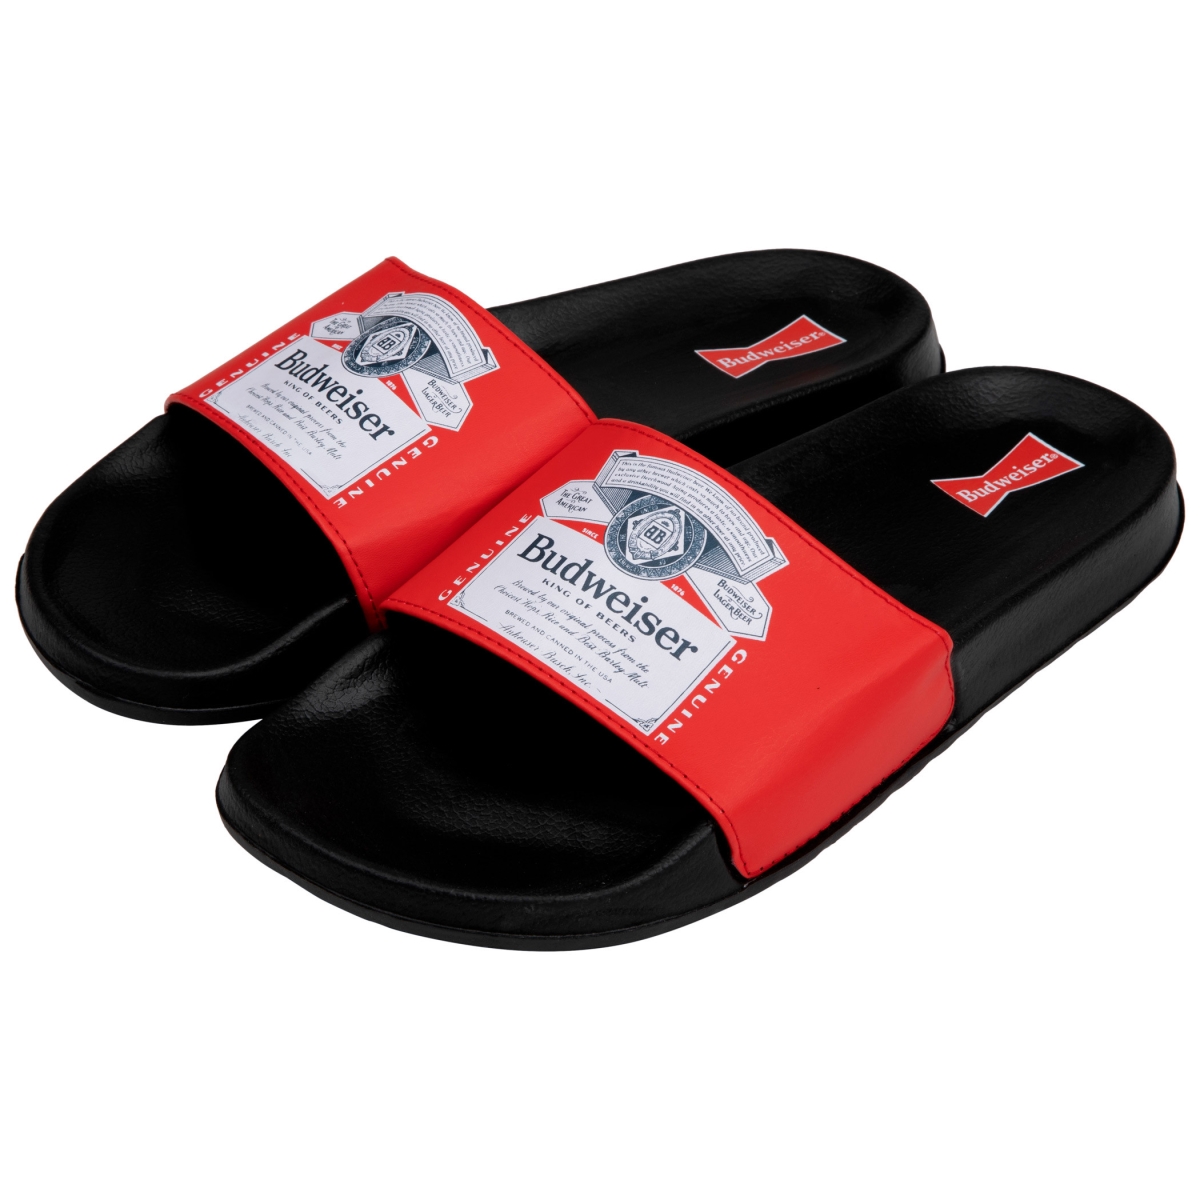 Picture of Budweiser 850811-7-8 Budweiser Logo Label Soccer Slides Adult Sandals - Size 7-8